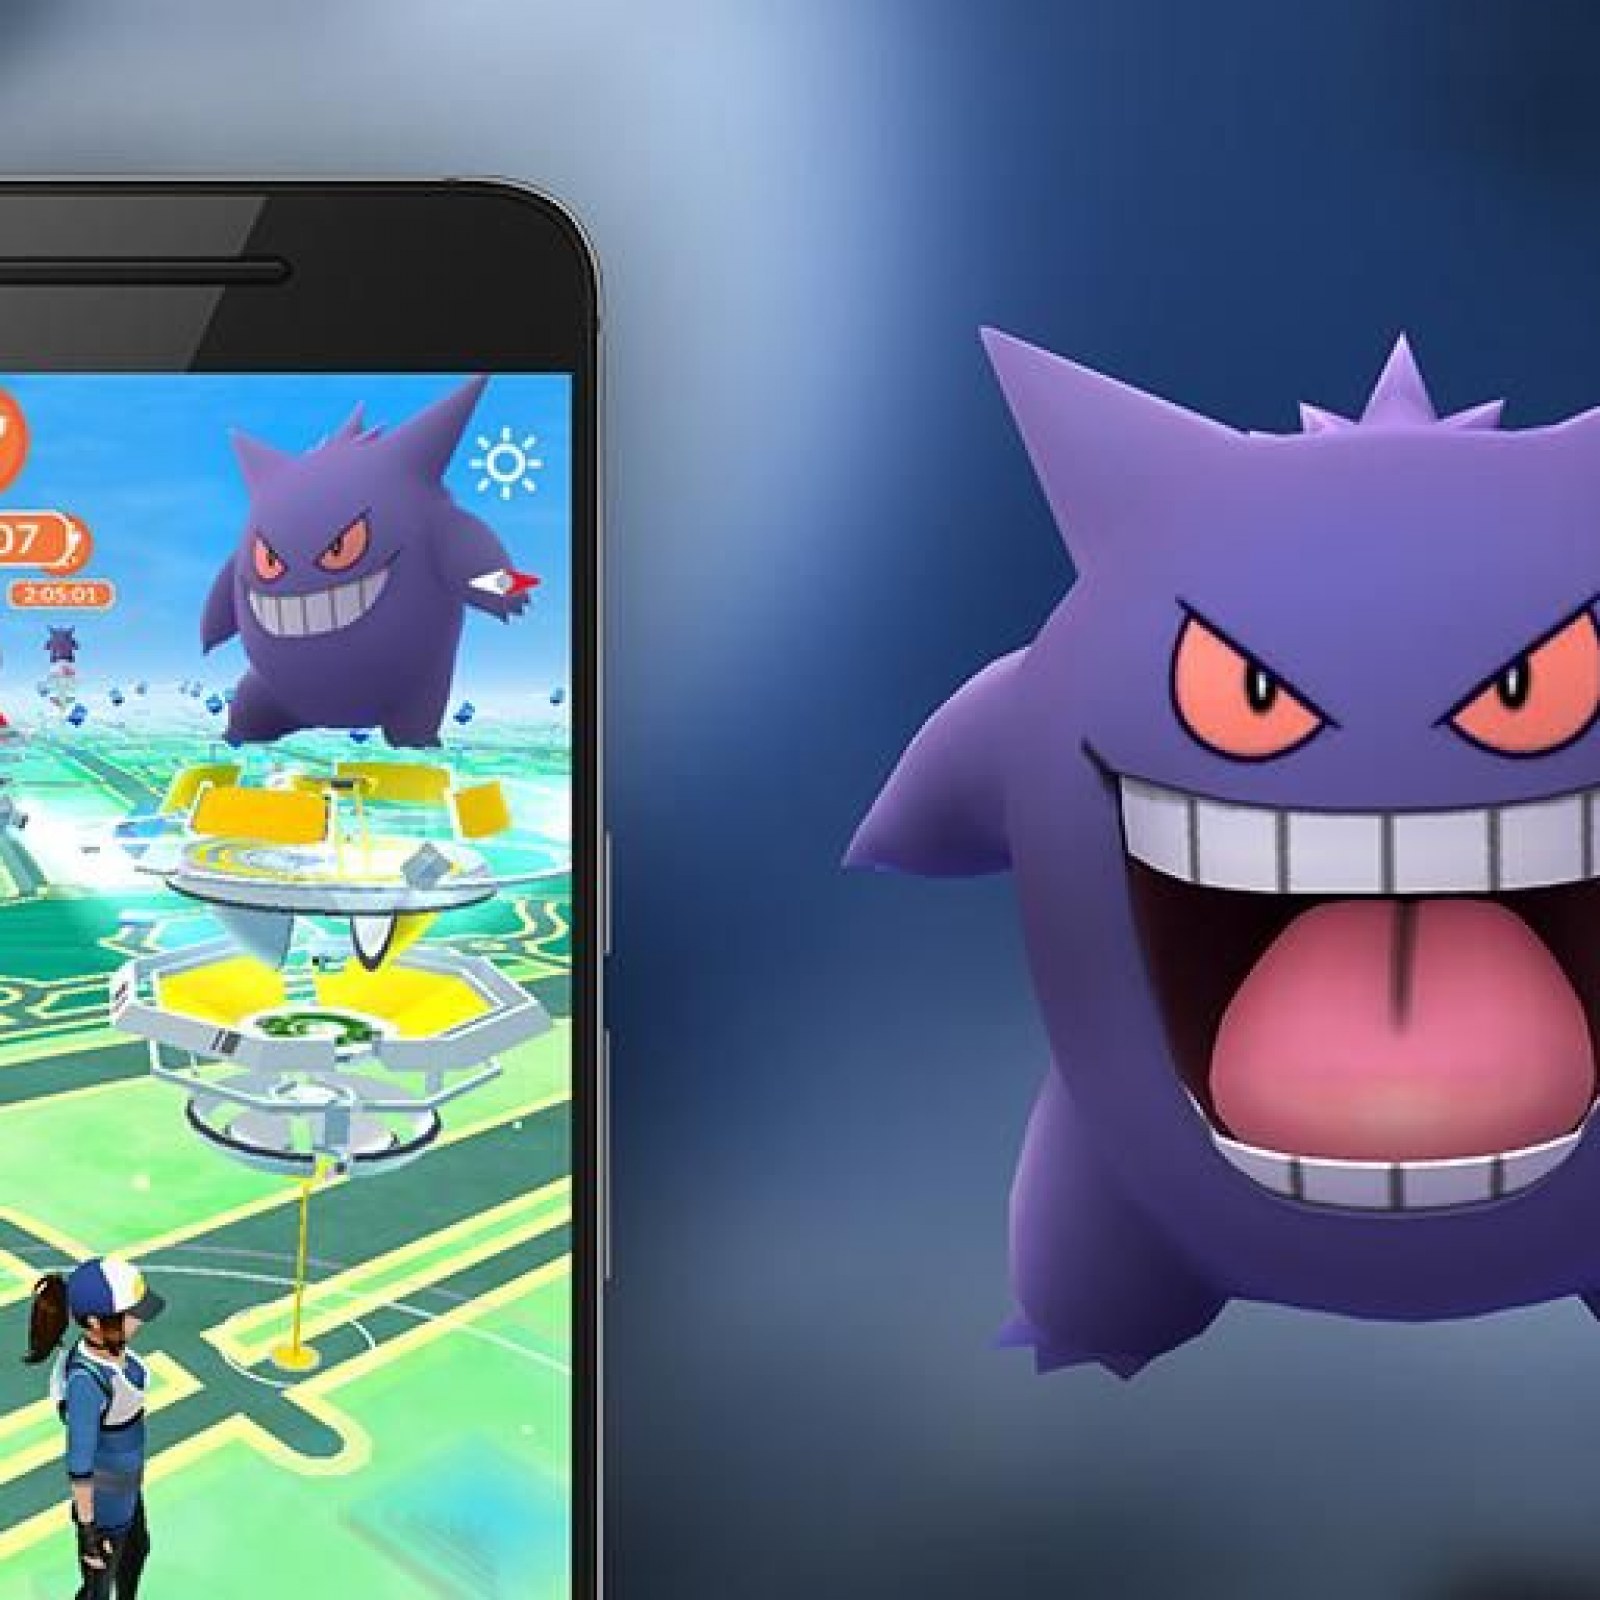 Pokémon Go' Gengar Day Announced, Shiny Gengar Chance in Raid Battles